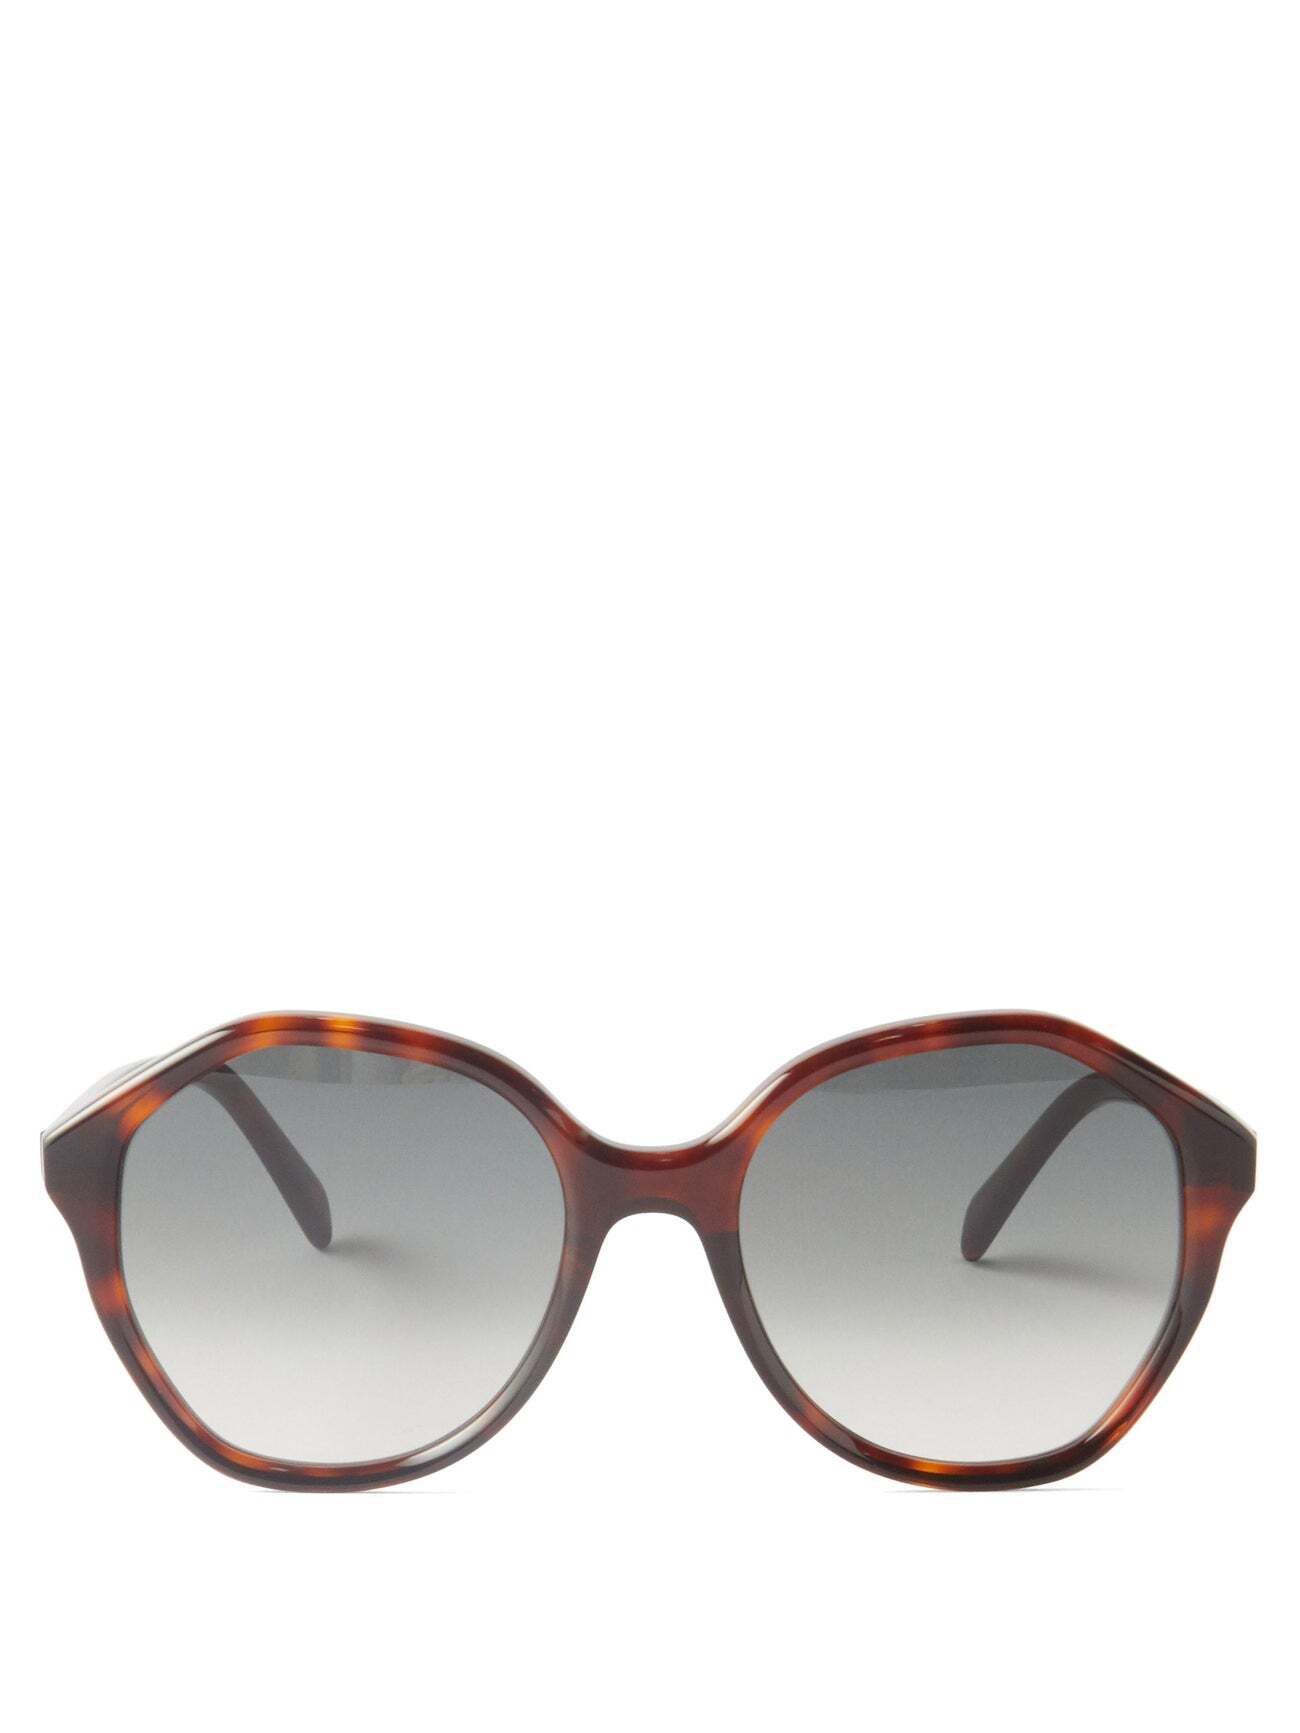 Celine Eyewear - Oversized Round Acetate Sunglasses - Womens - Dark Brown